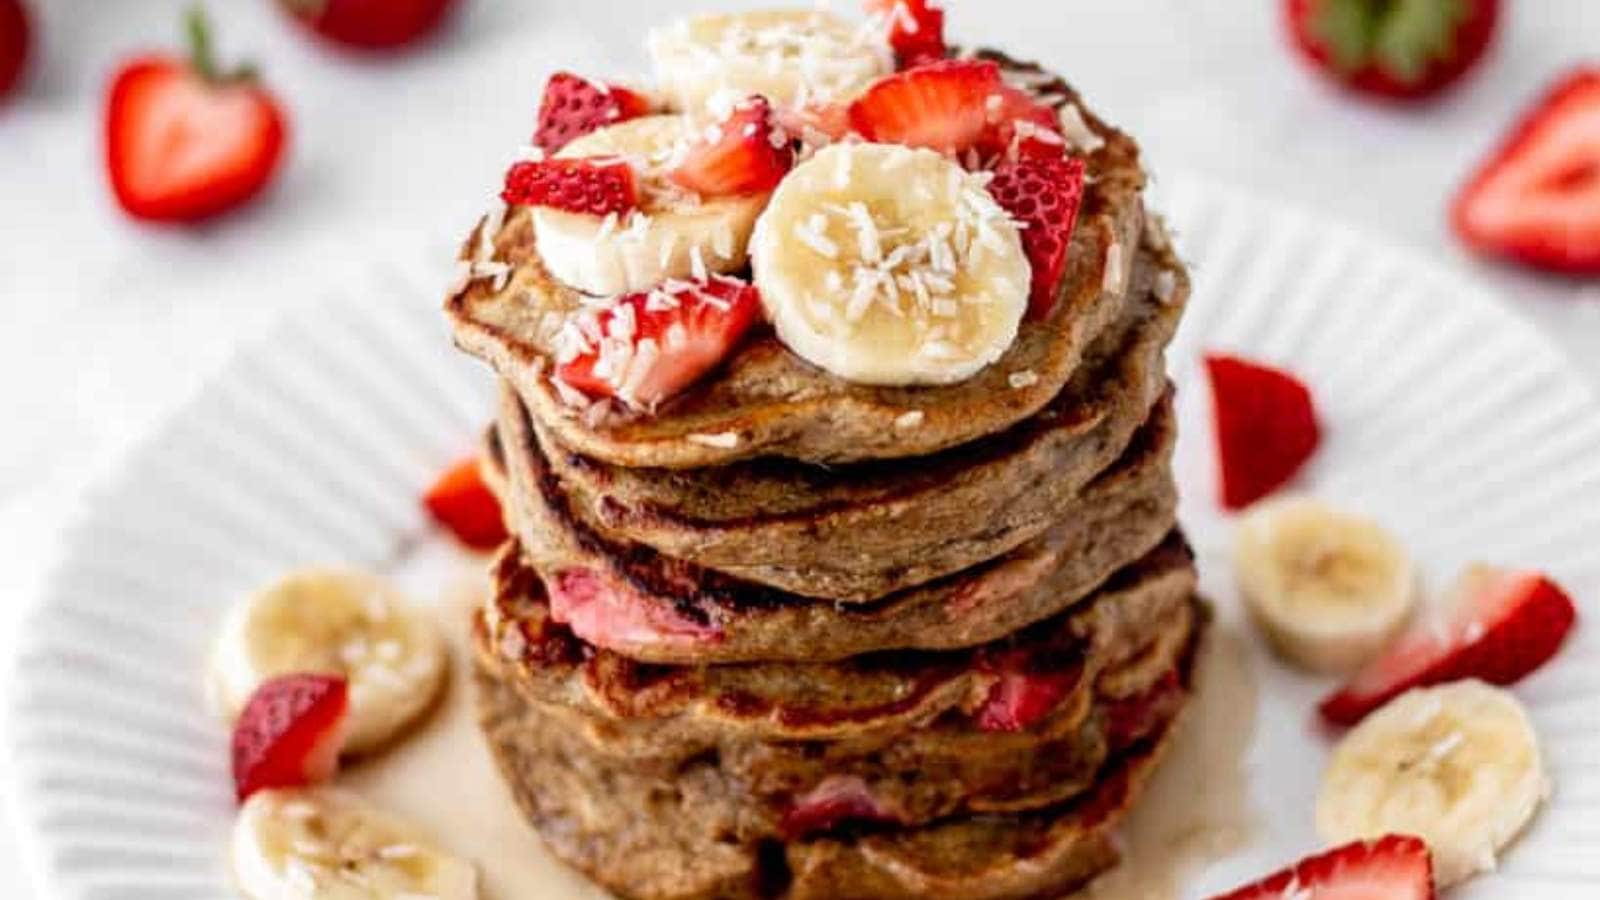 Strawberry Banana Pancakes recipe by Haute Healthy Living.